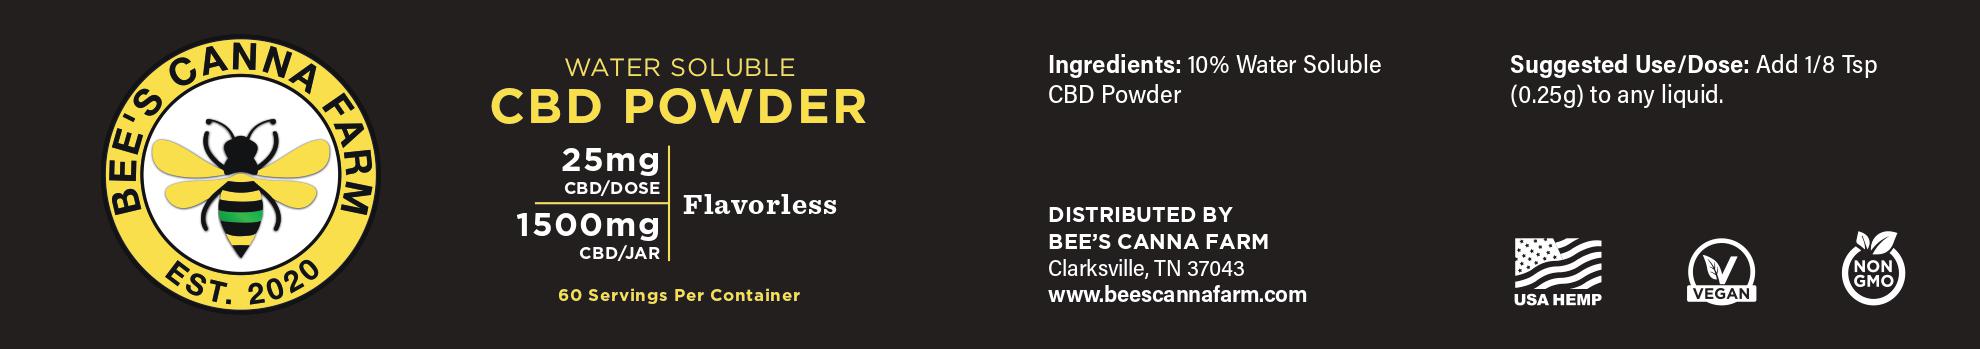 CBD Powder - Flavorless - 25mg/1500mg